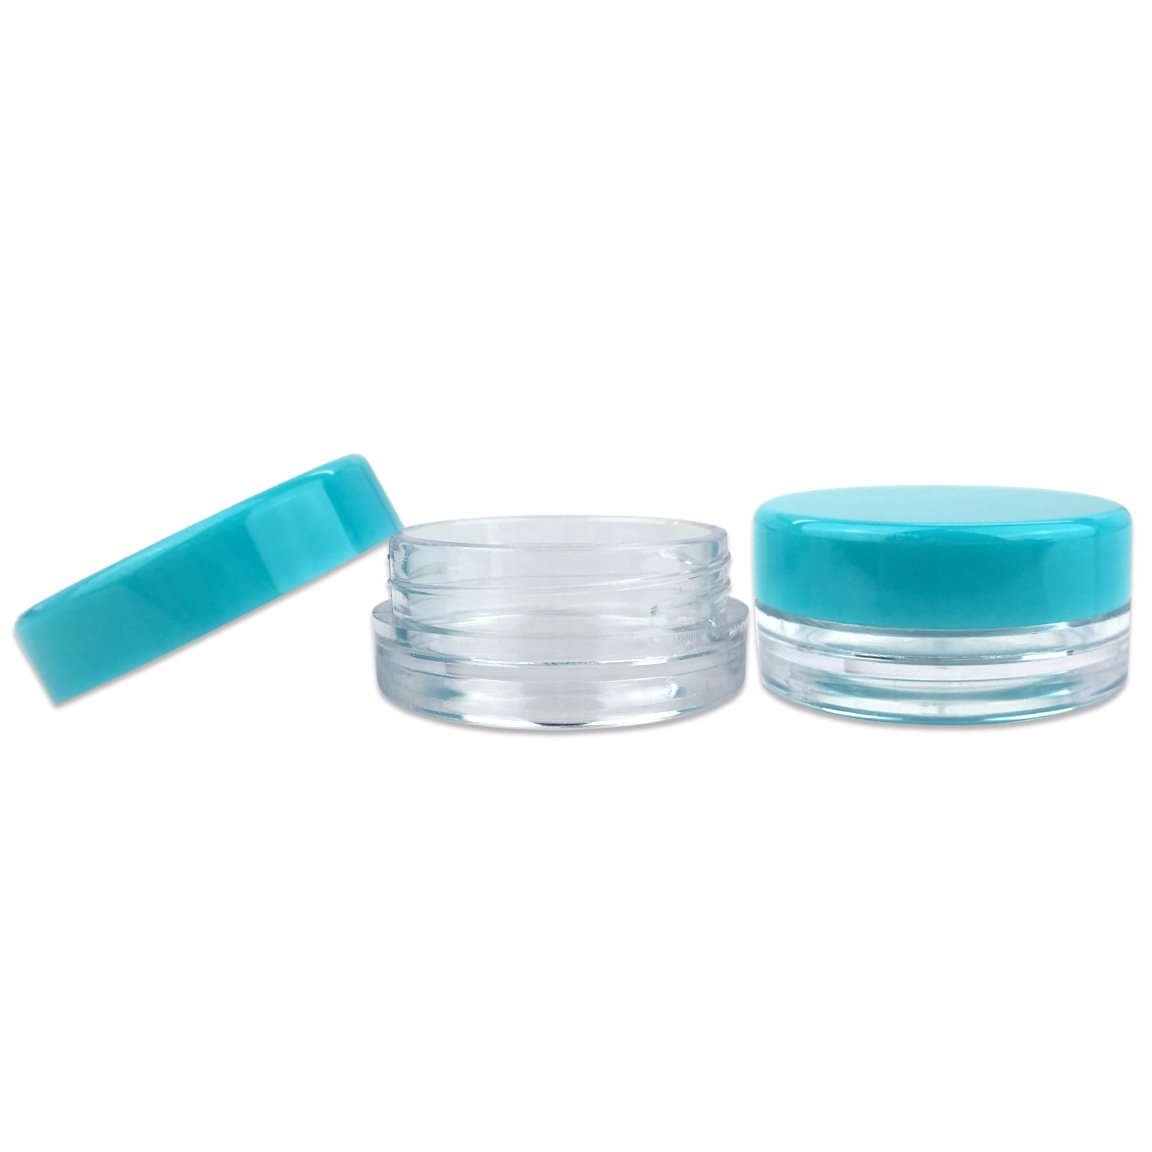 Beauticom (200 Pieces Jars + Lid) 3G/3ML Round Clear Jars with TEAL Sky Blue Screw Cap Lids for Scrubs, Oils, Toner, Salves, Creams, Lotions, Makeup Samples, Lip Balms - BPA Free